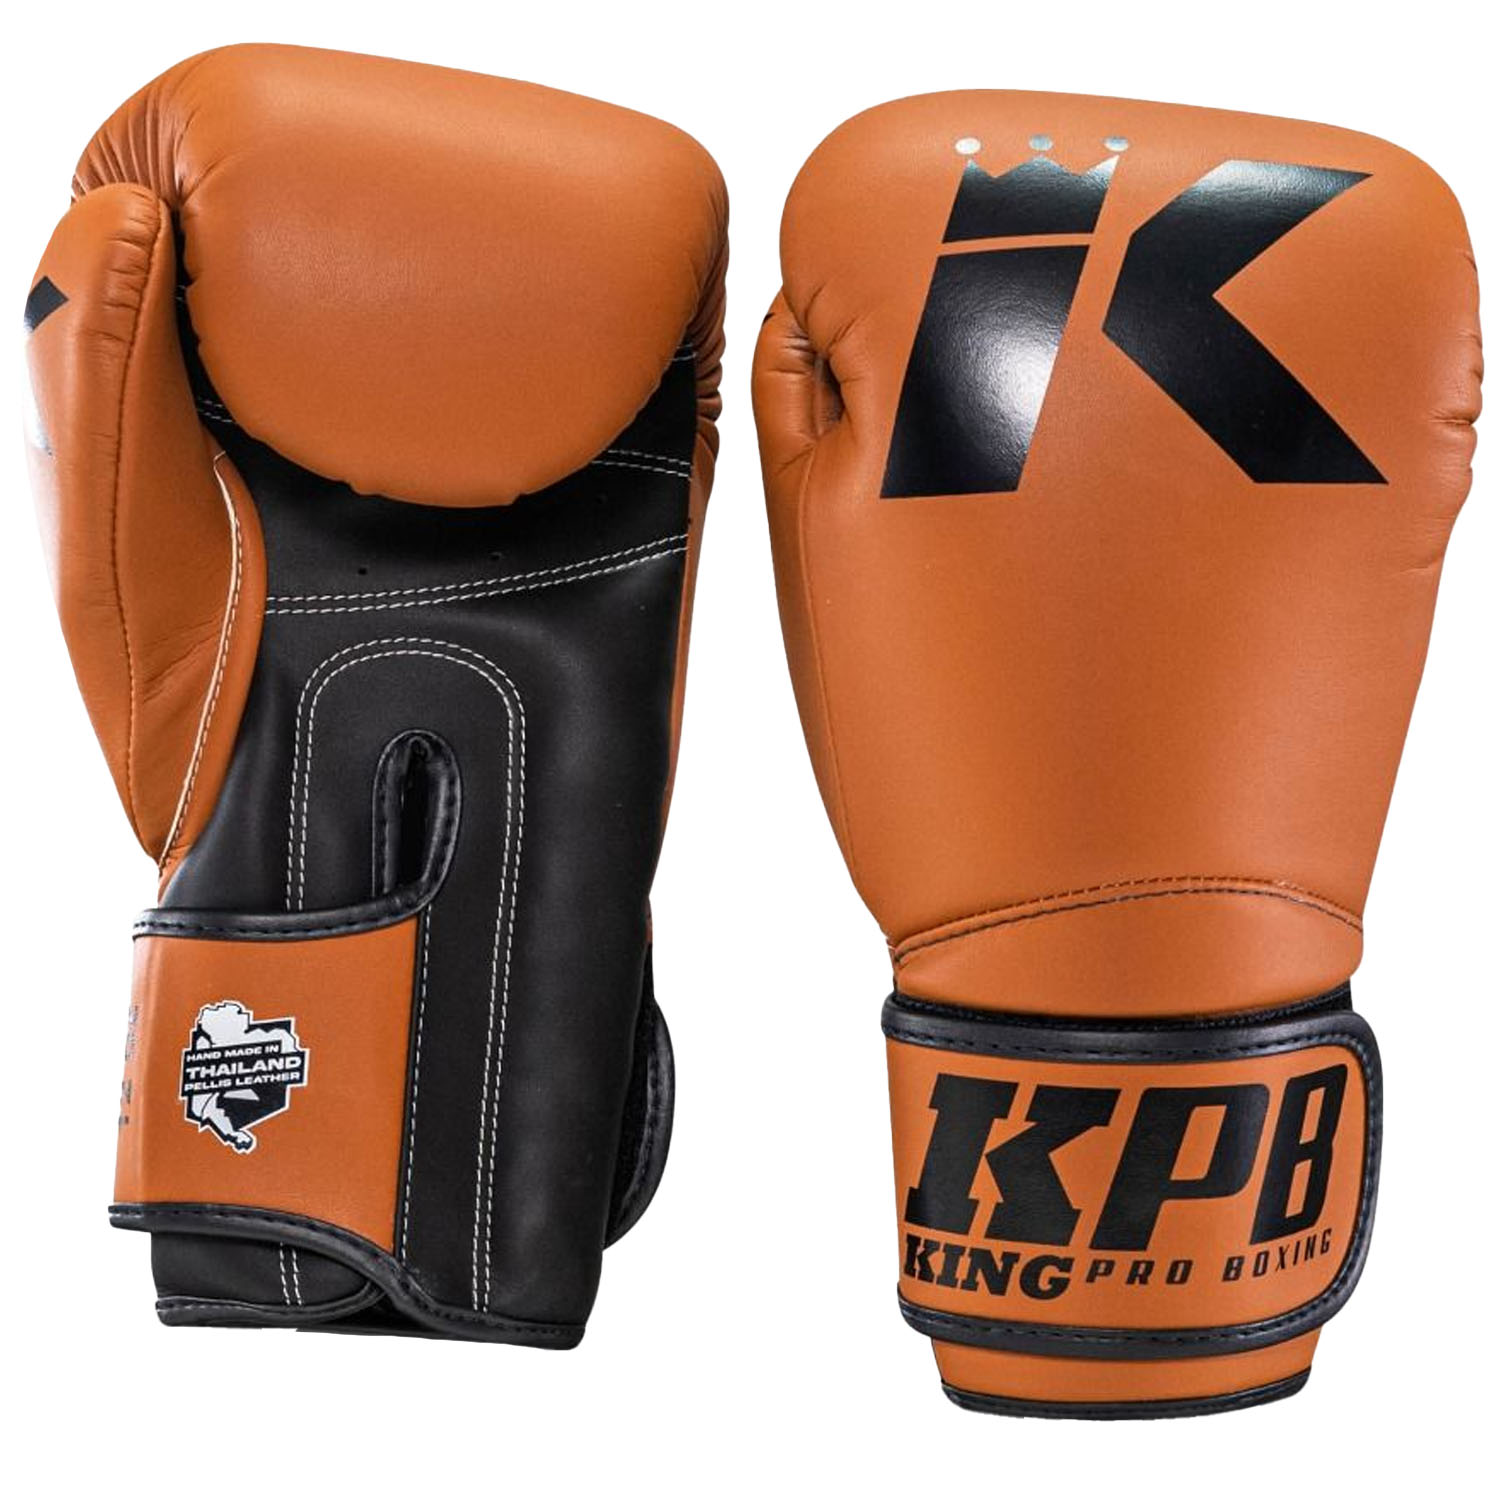 KING PRO BOXING Boxing Gloves, BGK 3, orange